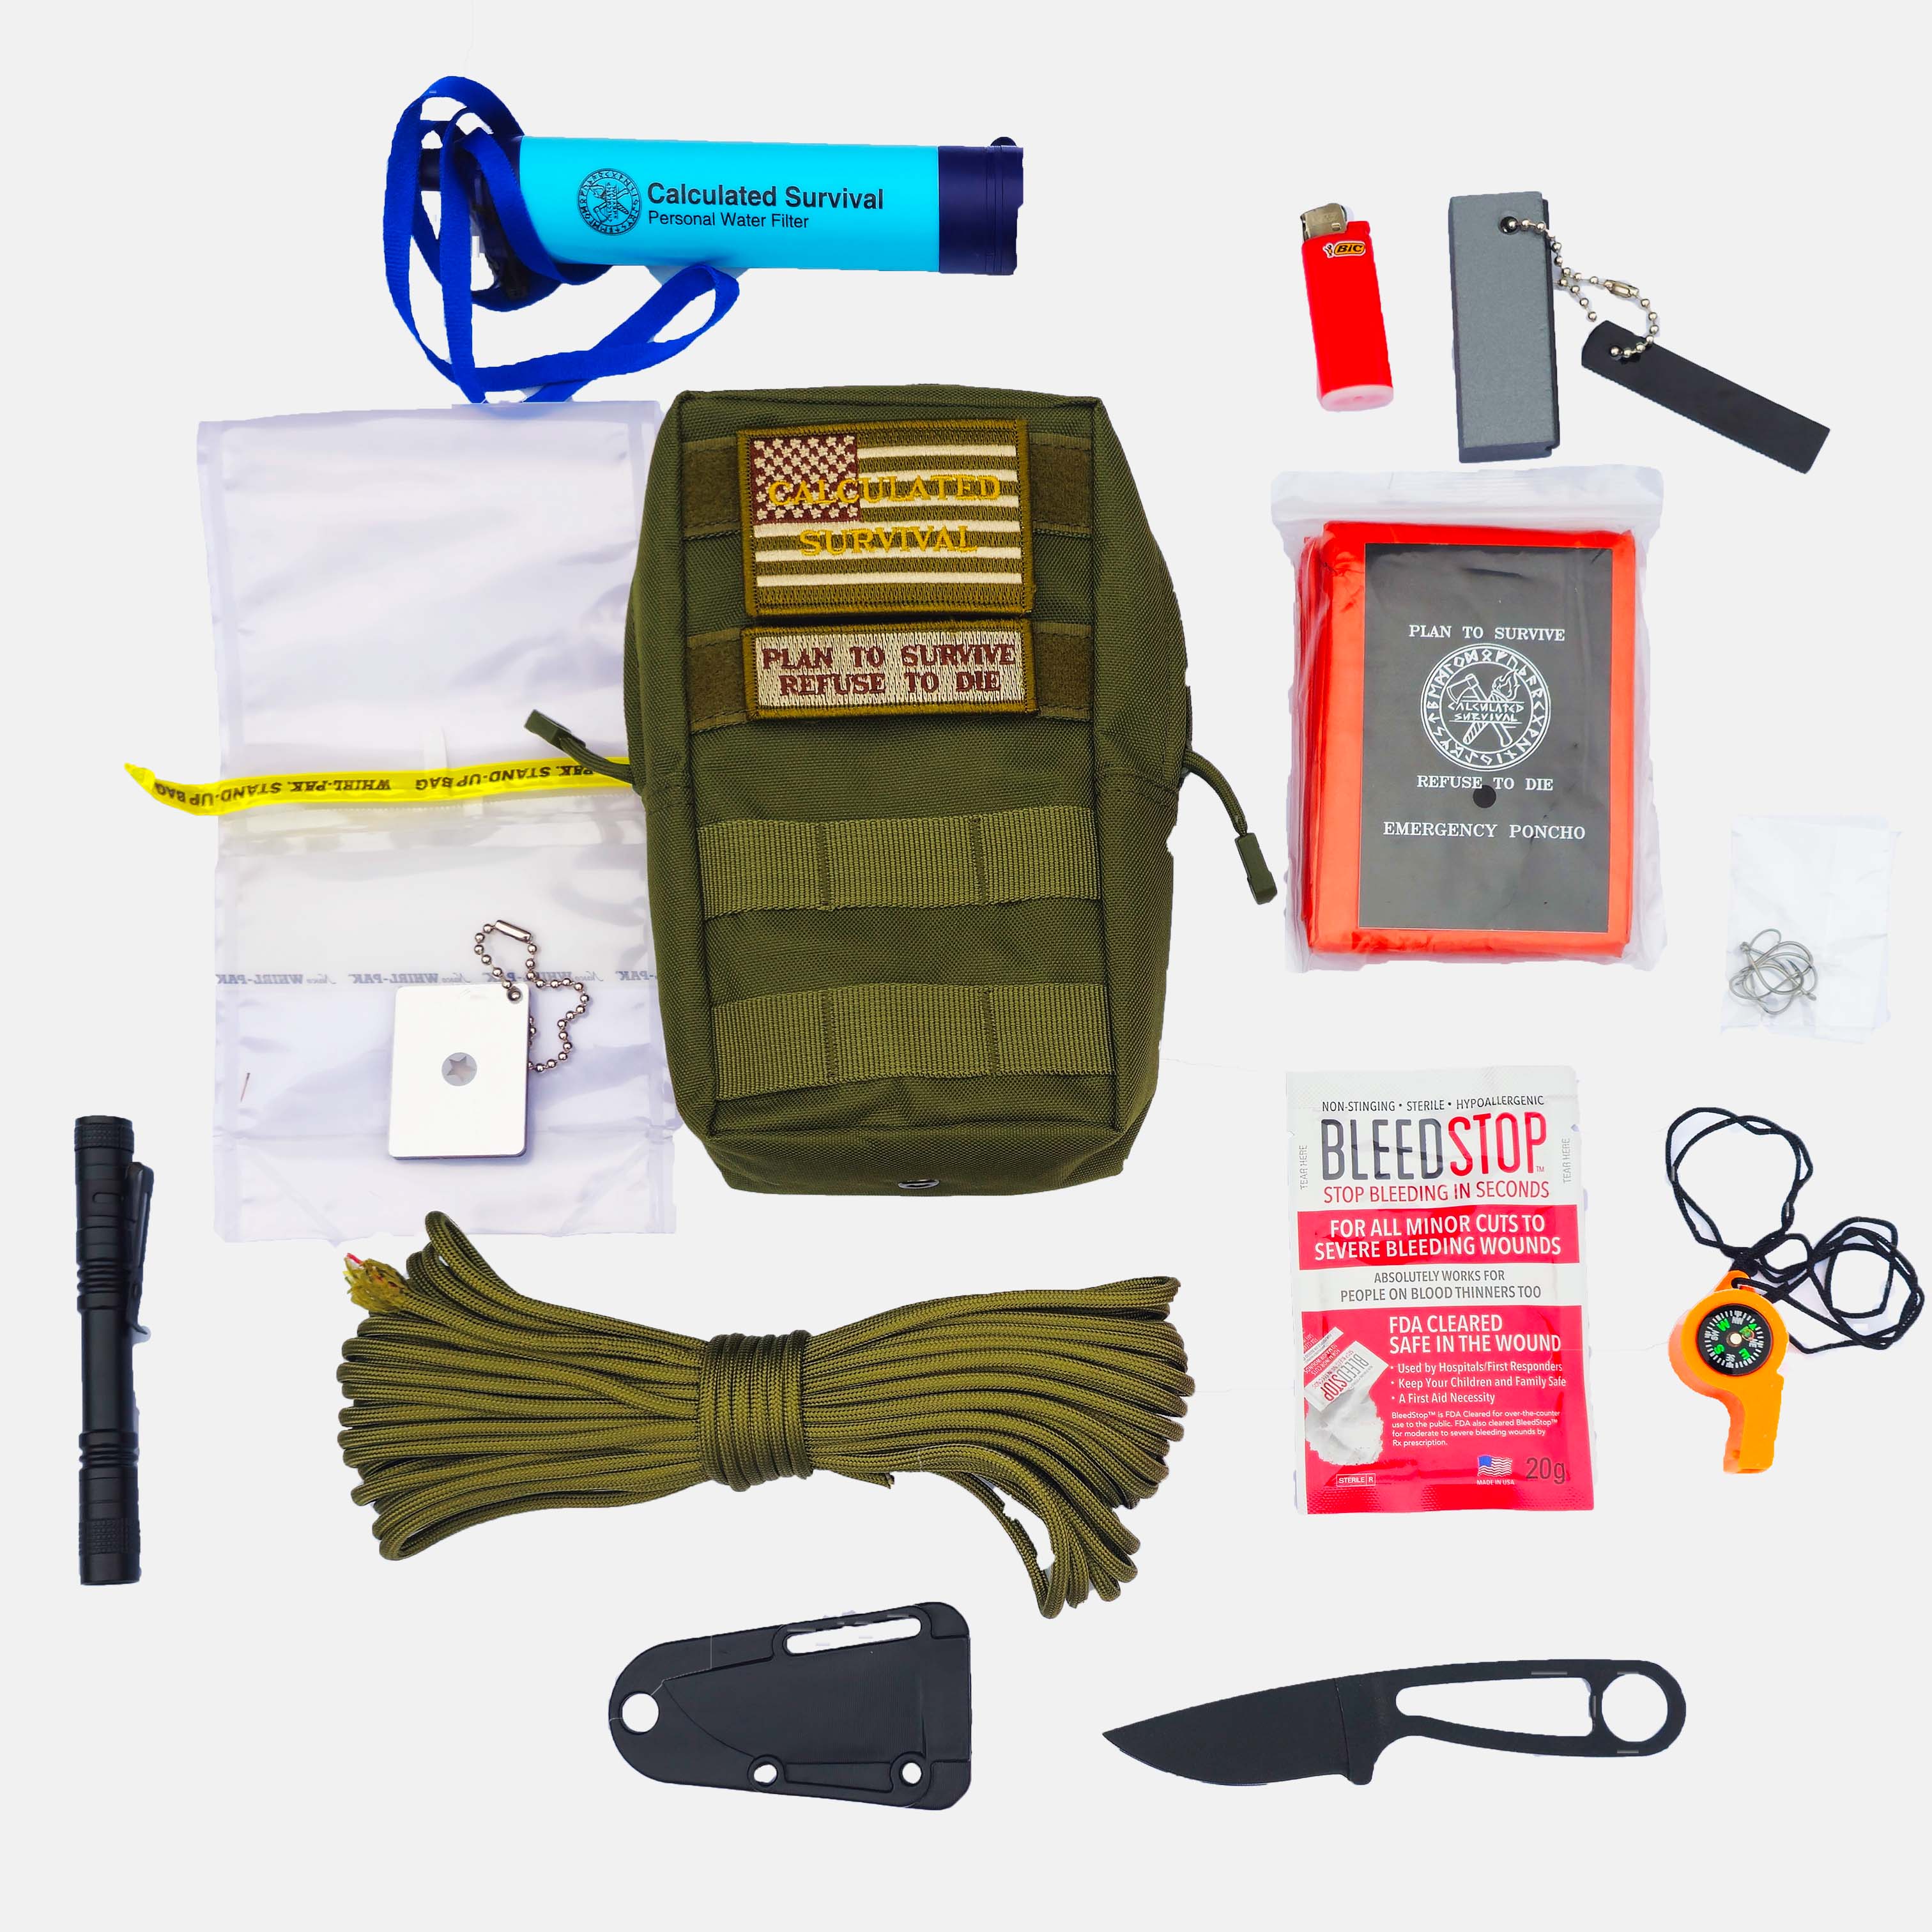 Back to School Teacher Emergency Kit 2015 | Diy sewing projects, Sewing  projects, Teacher emergency kit